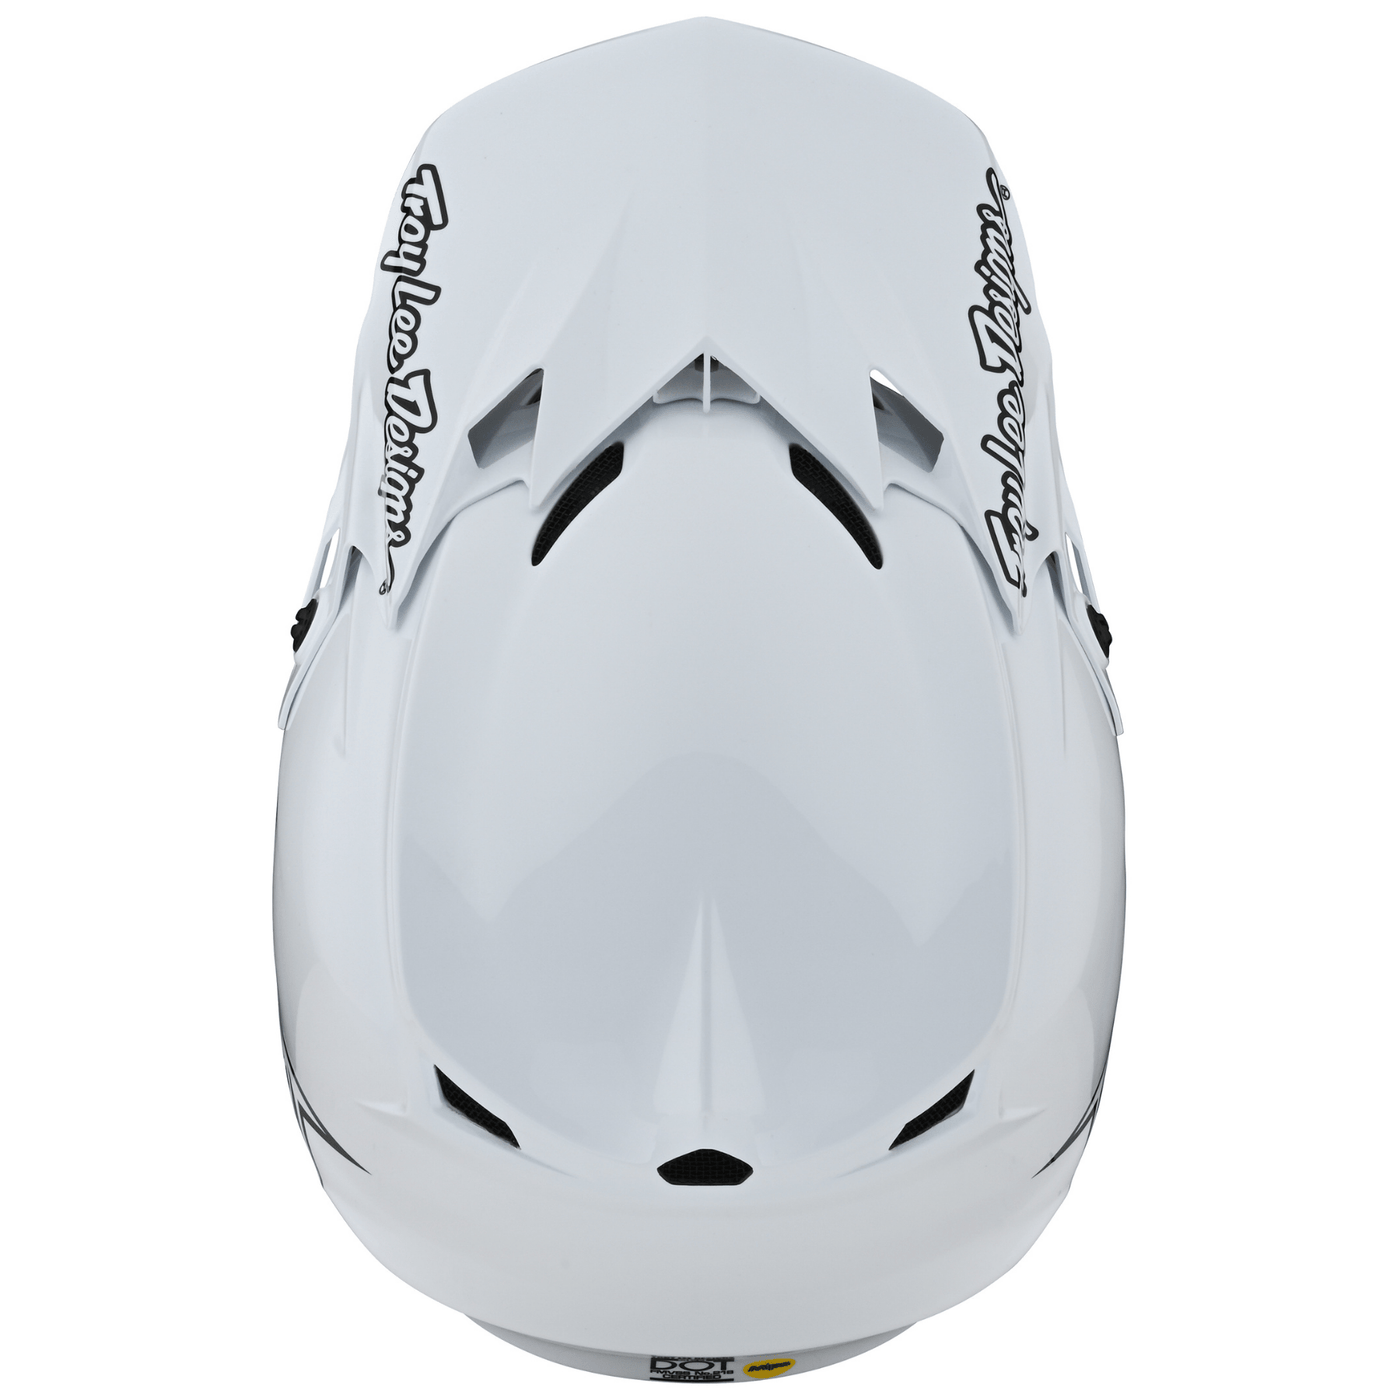 Troy Lee Designs SE4 Polyacrylite Helmet Mono - White 8Lines Shop - Fast Shipping